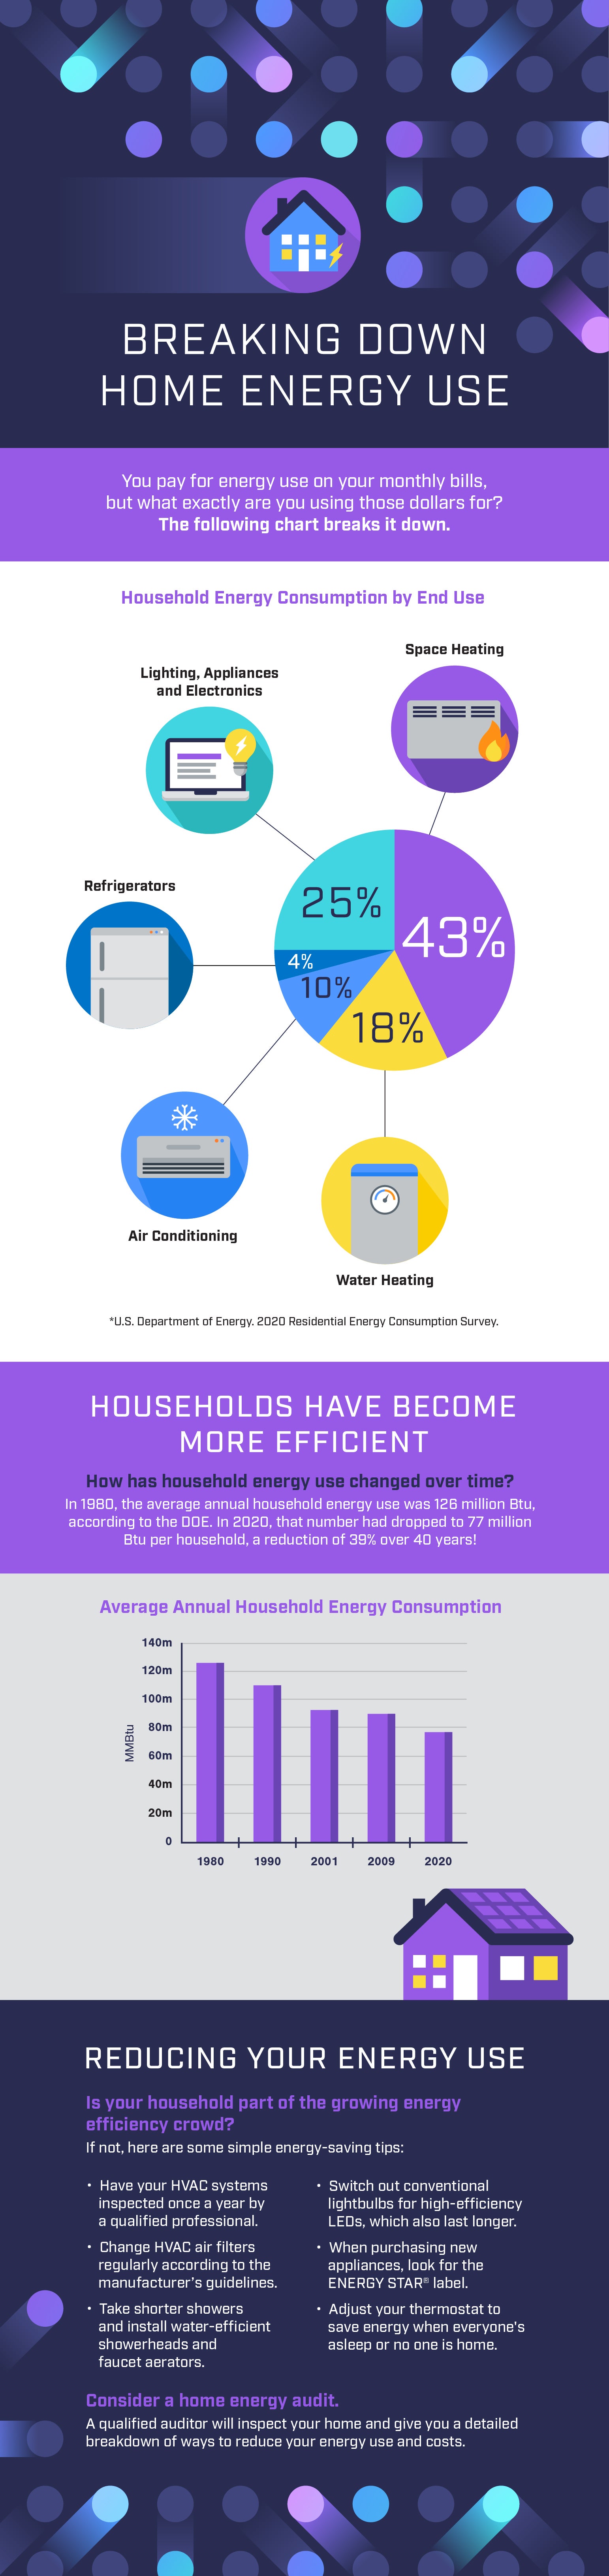 Home energy use